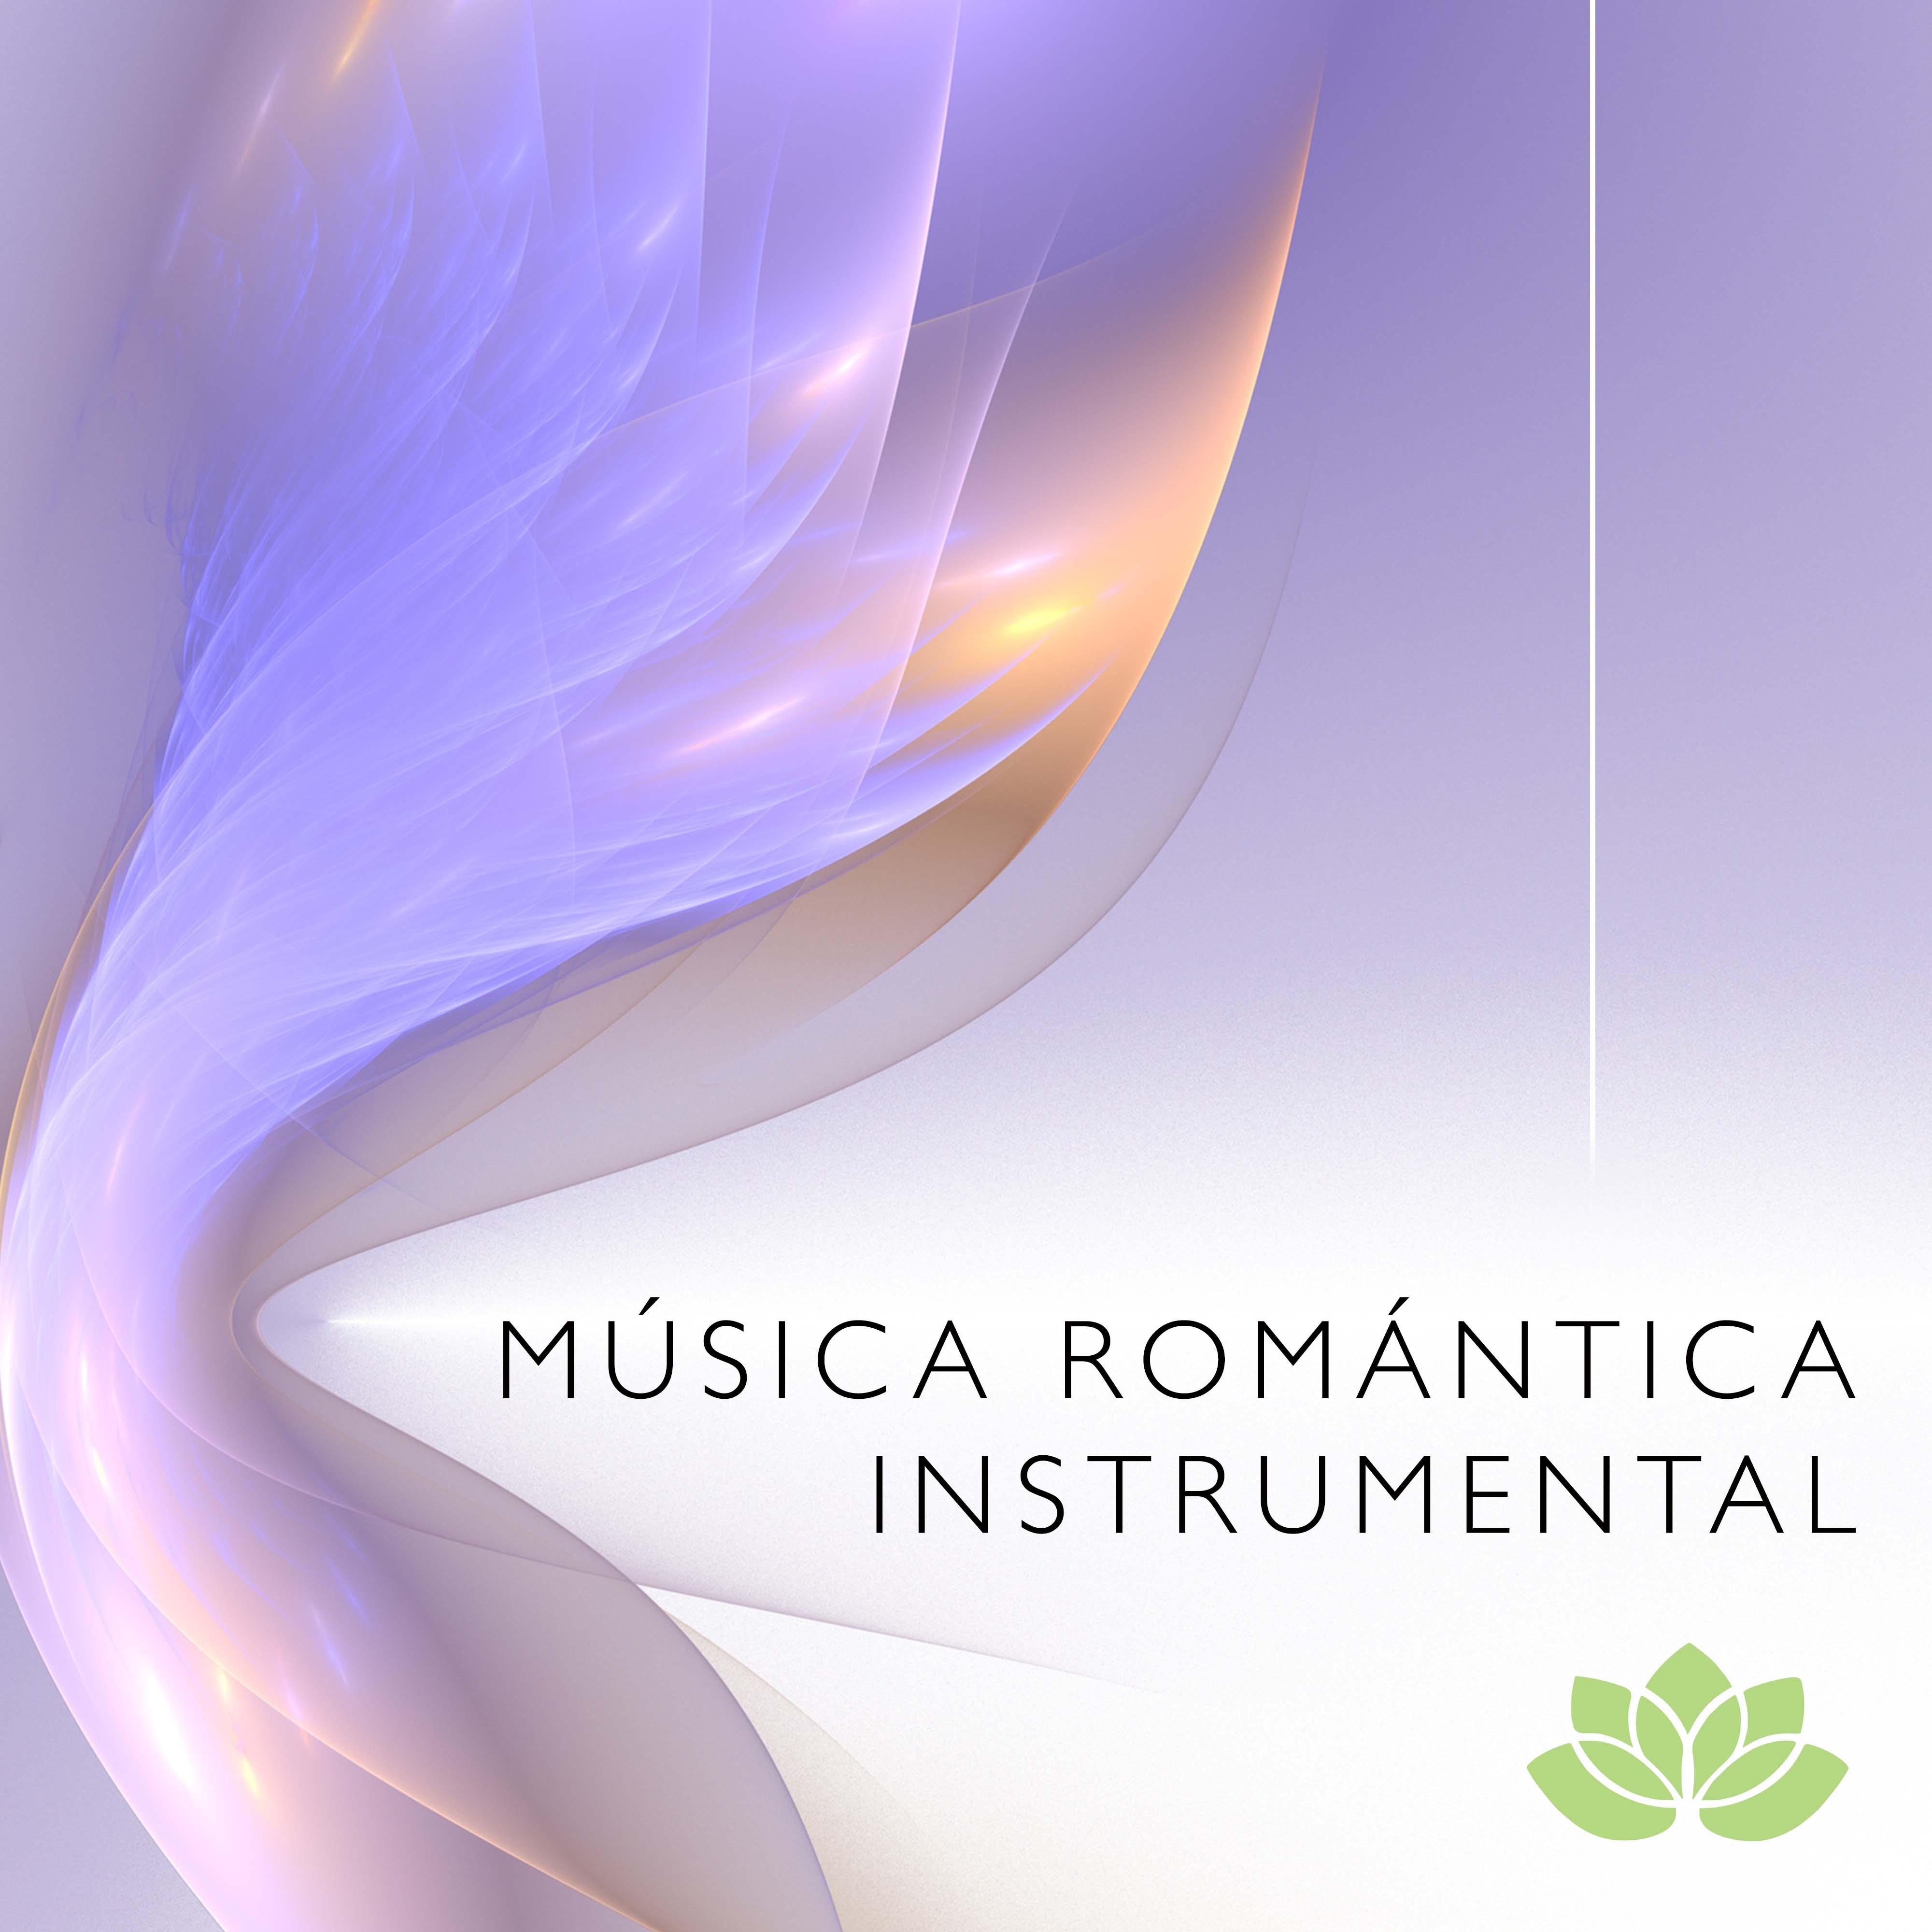 Musica Romantica Instrumental